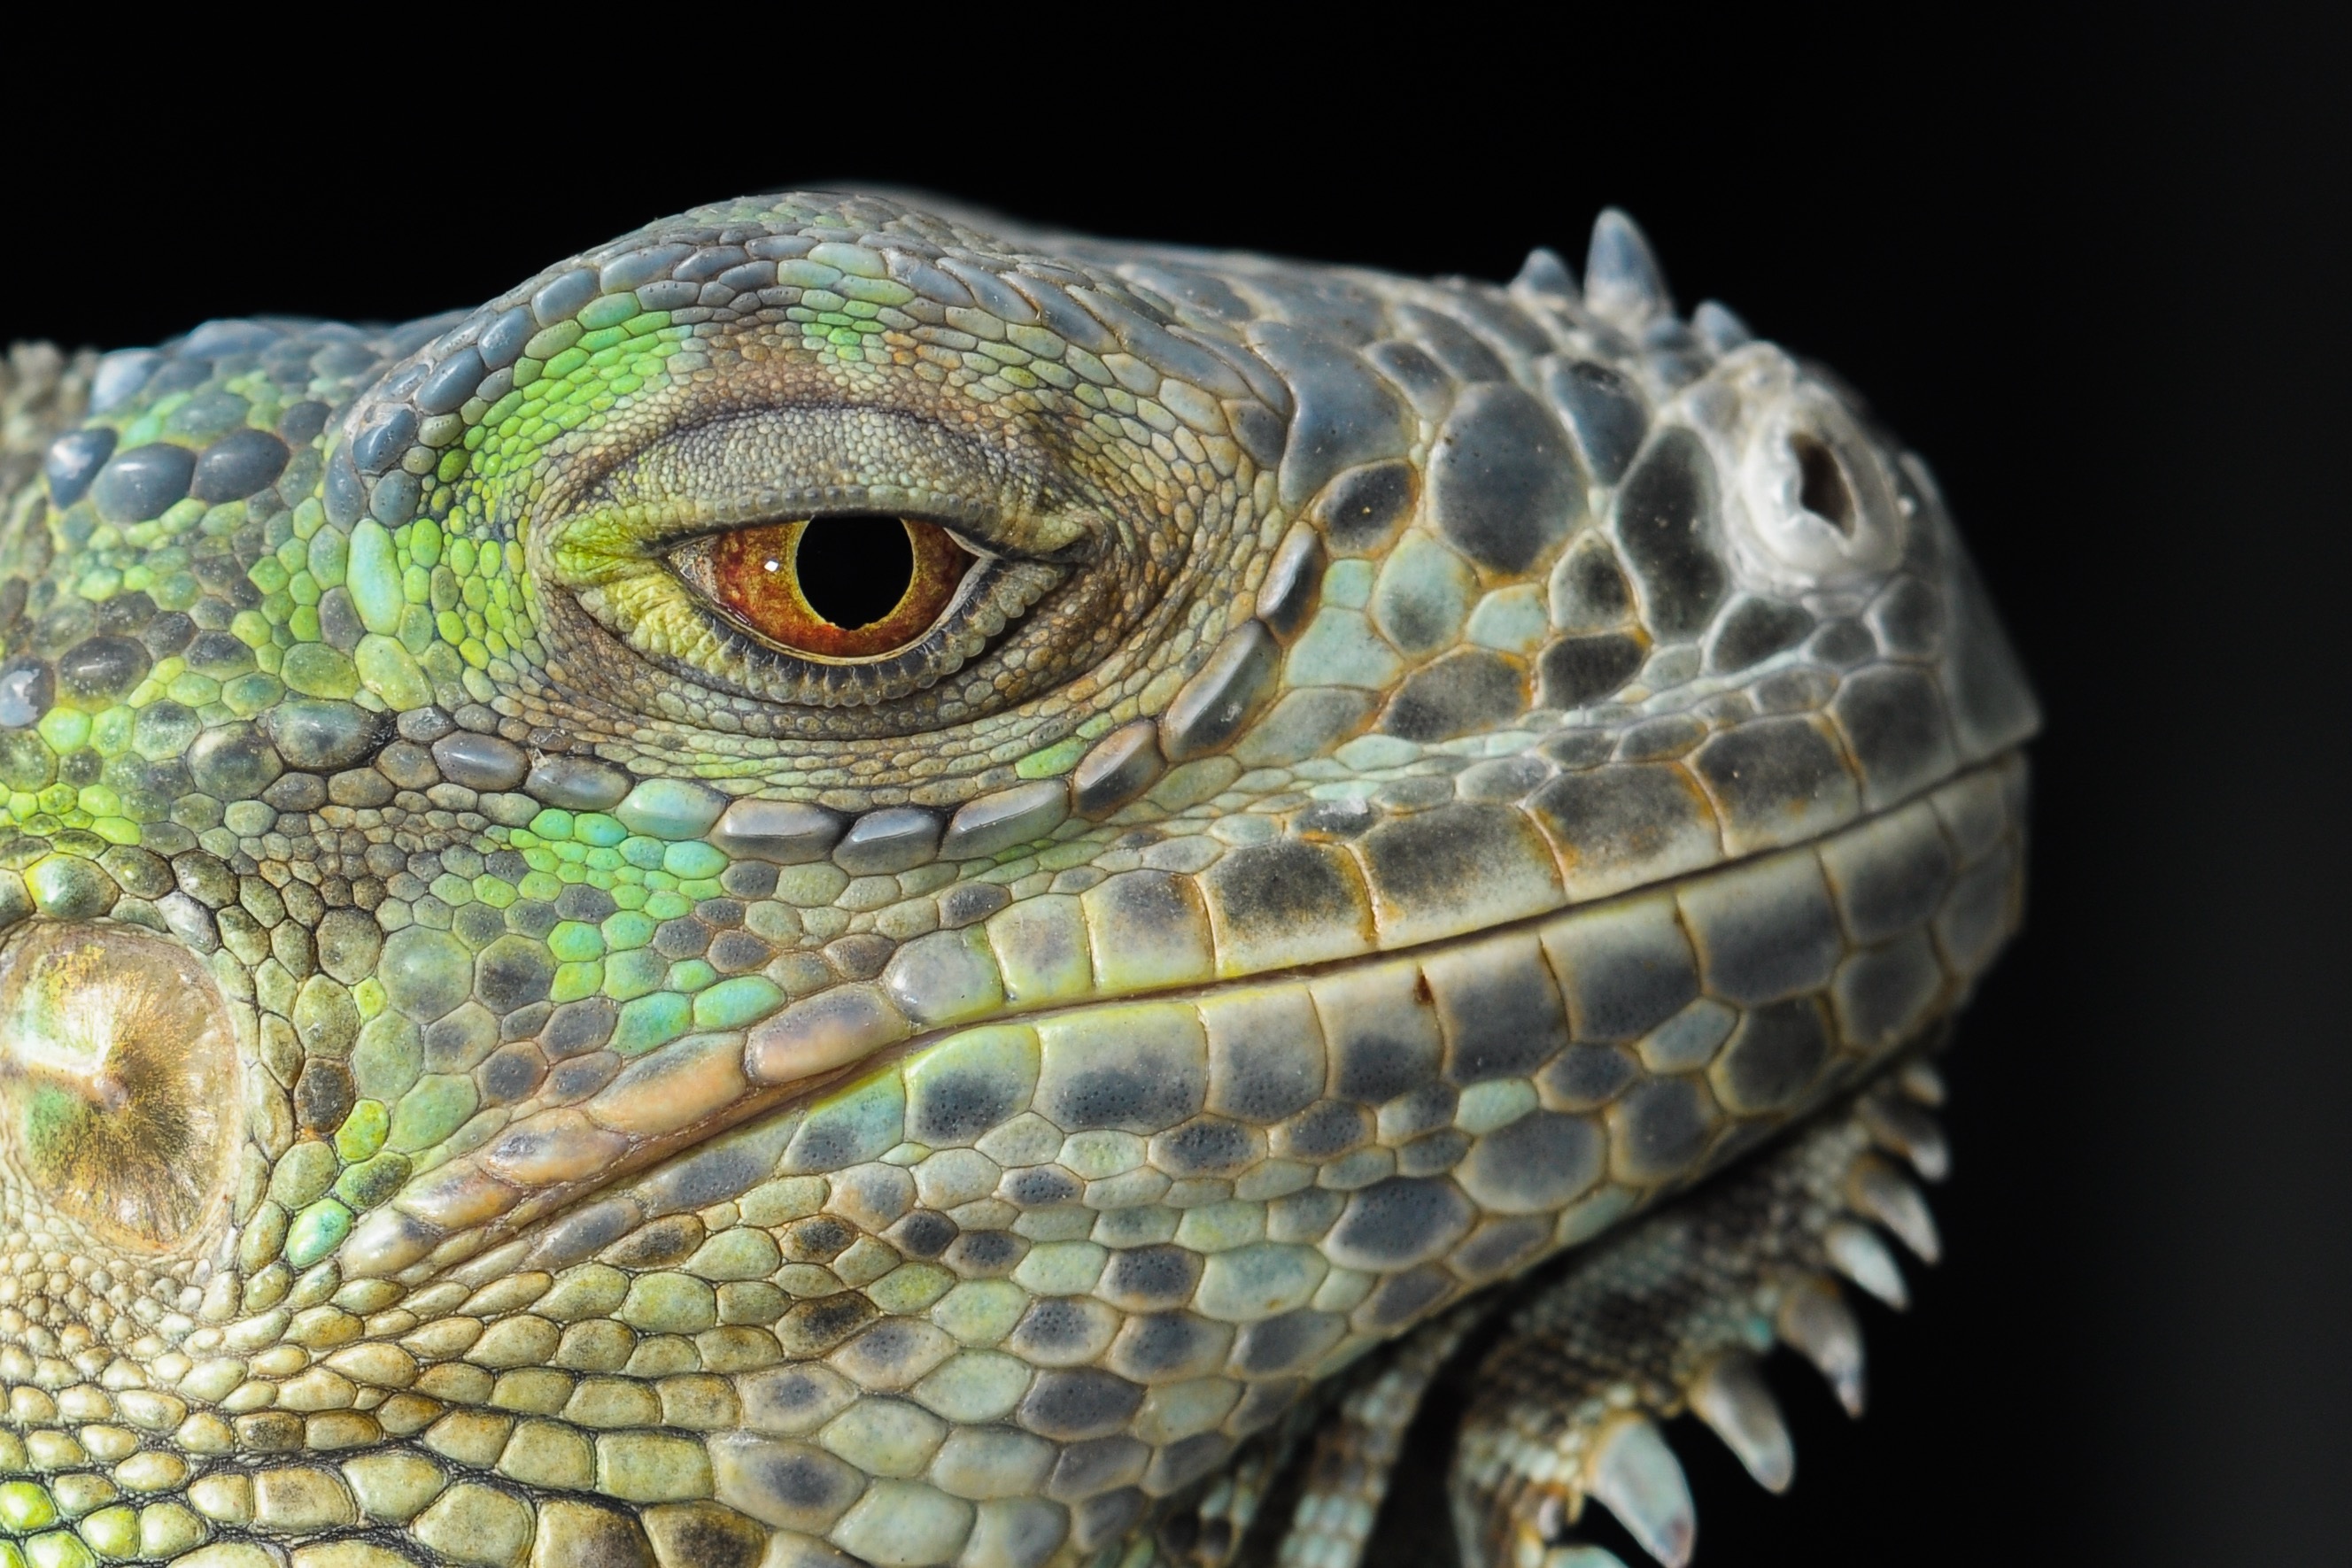 Wallpapers wildlife reptile iguana on the desktop